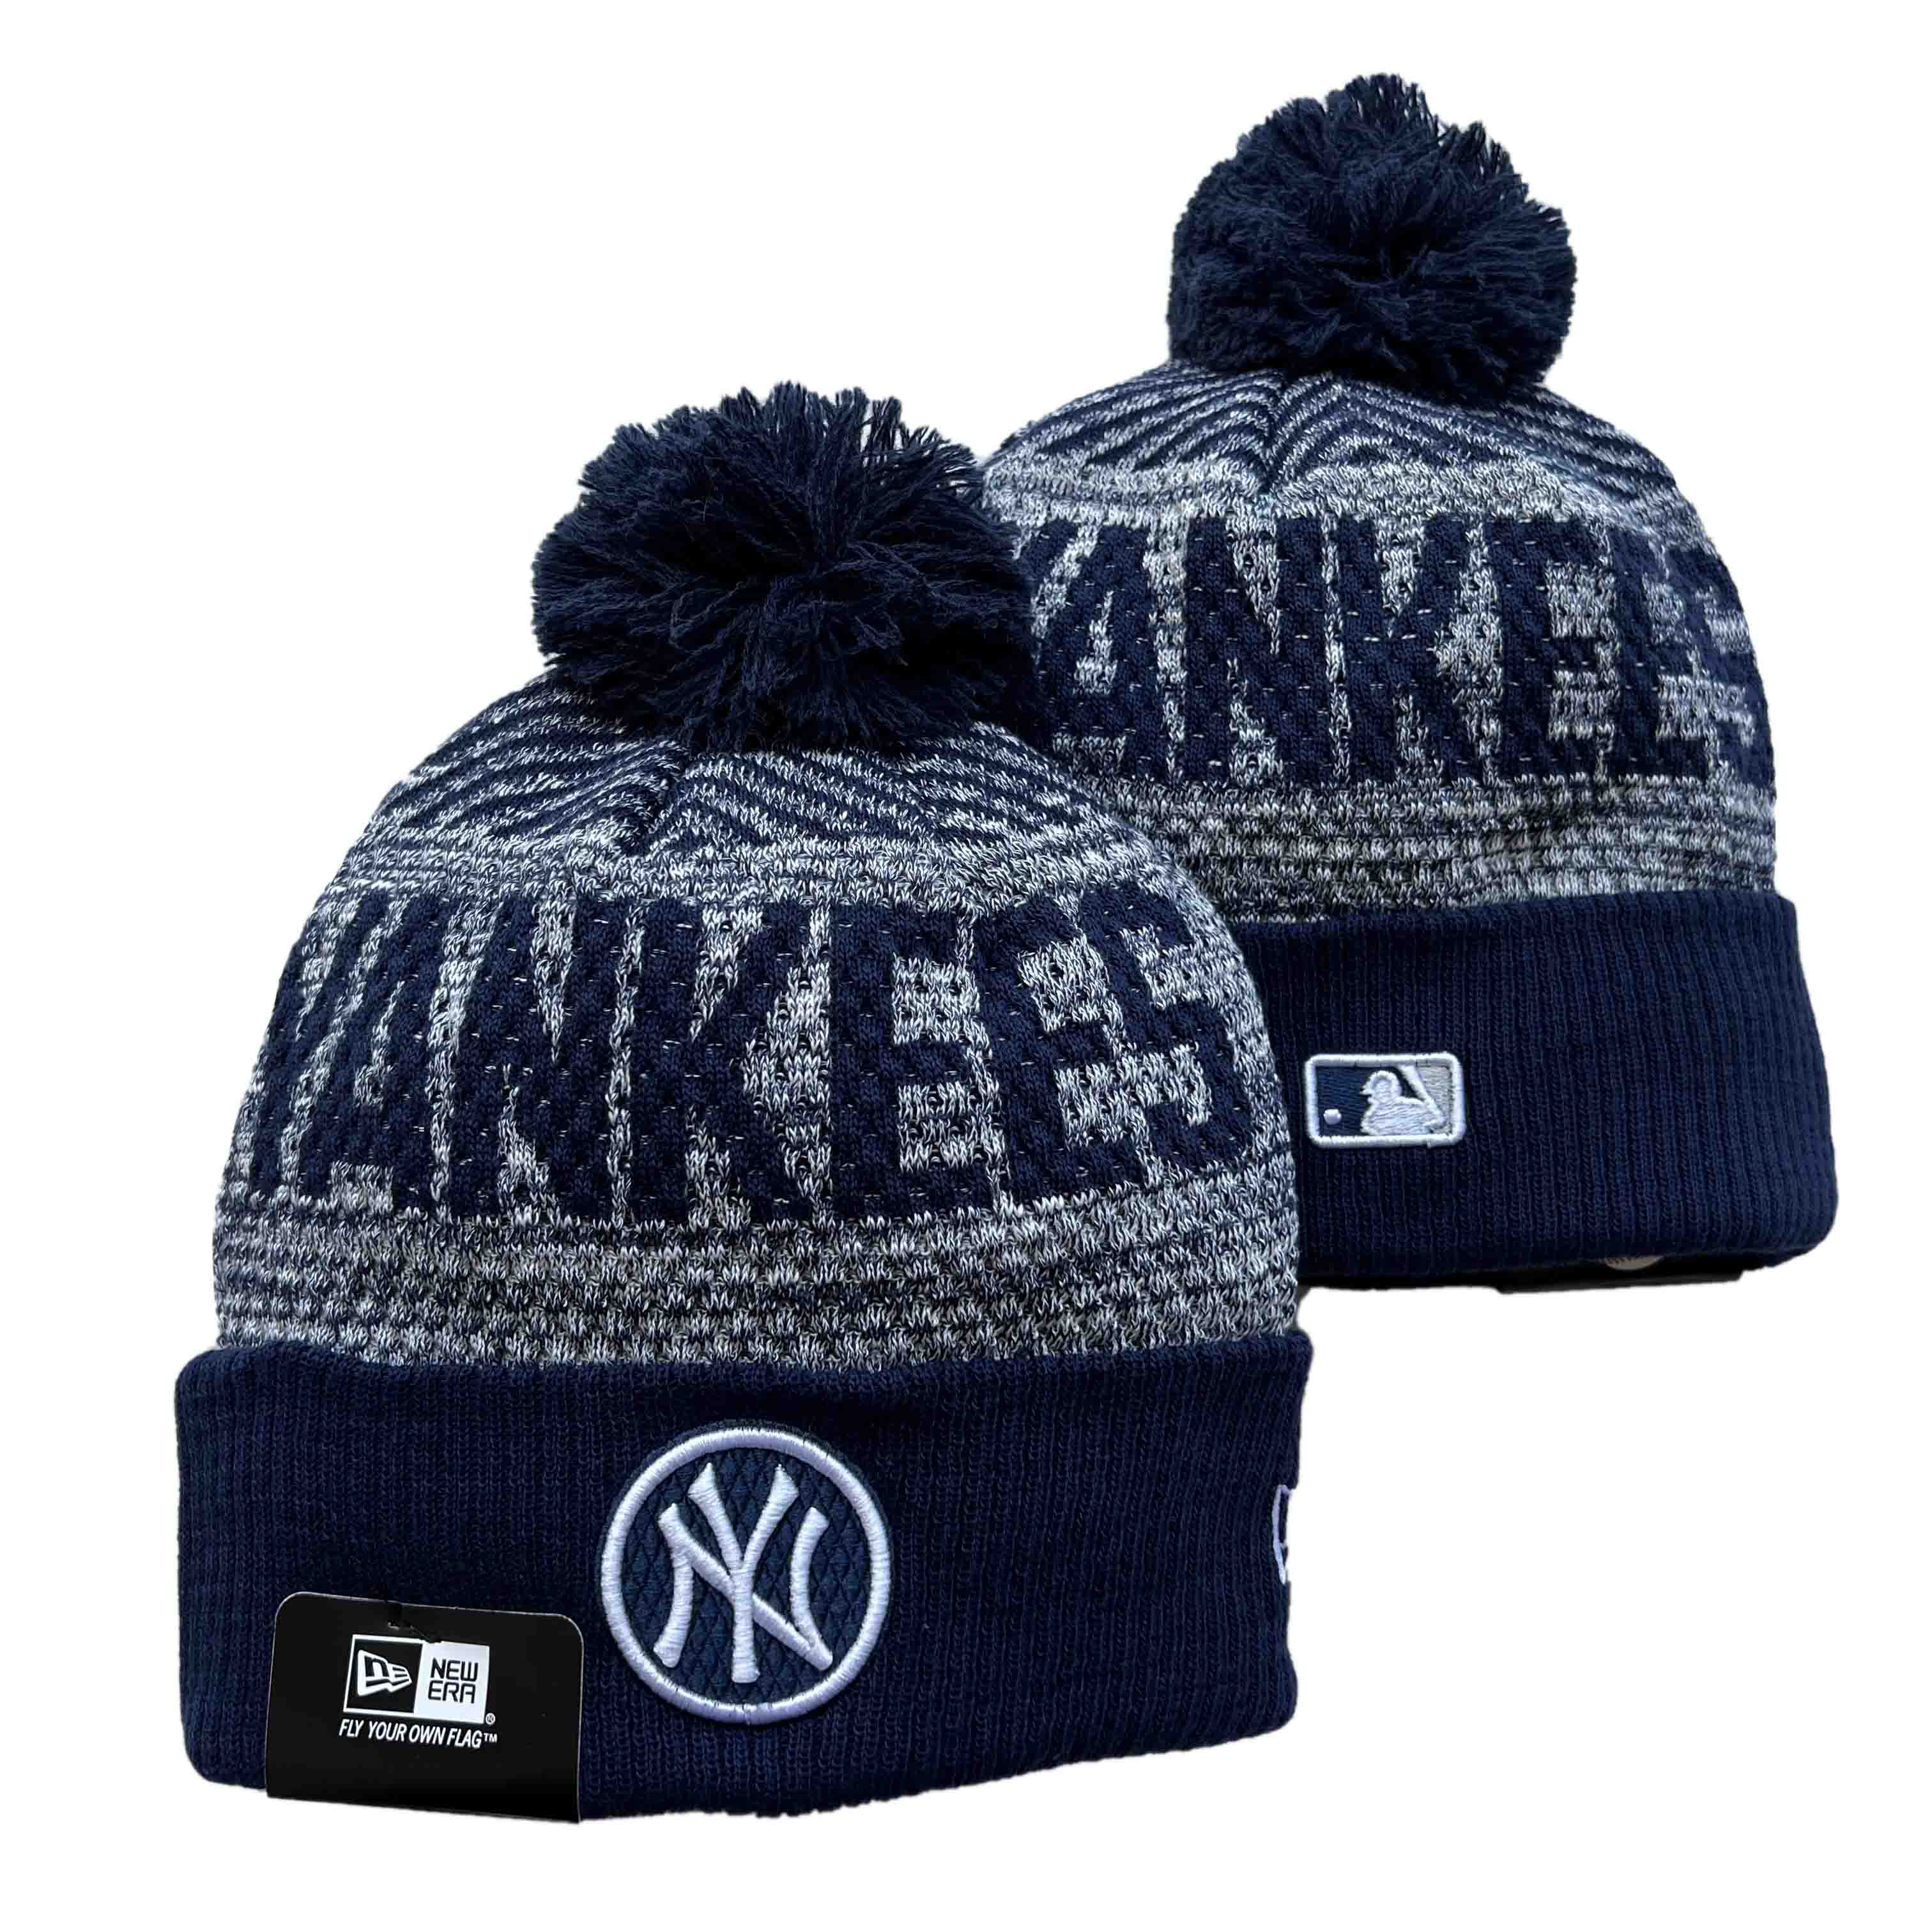 New York Yankees Knit Hats -5